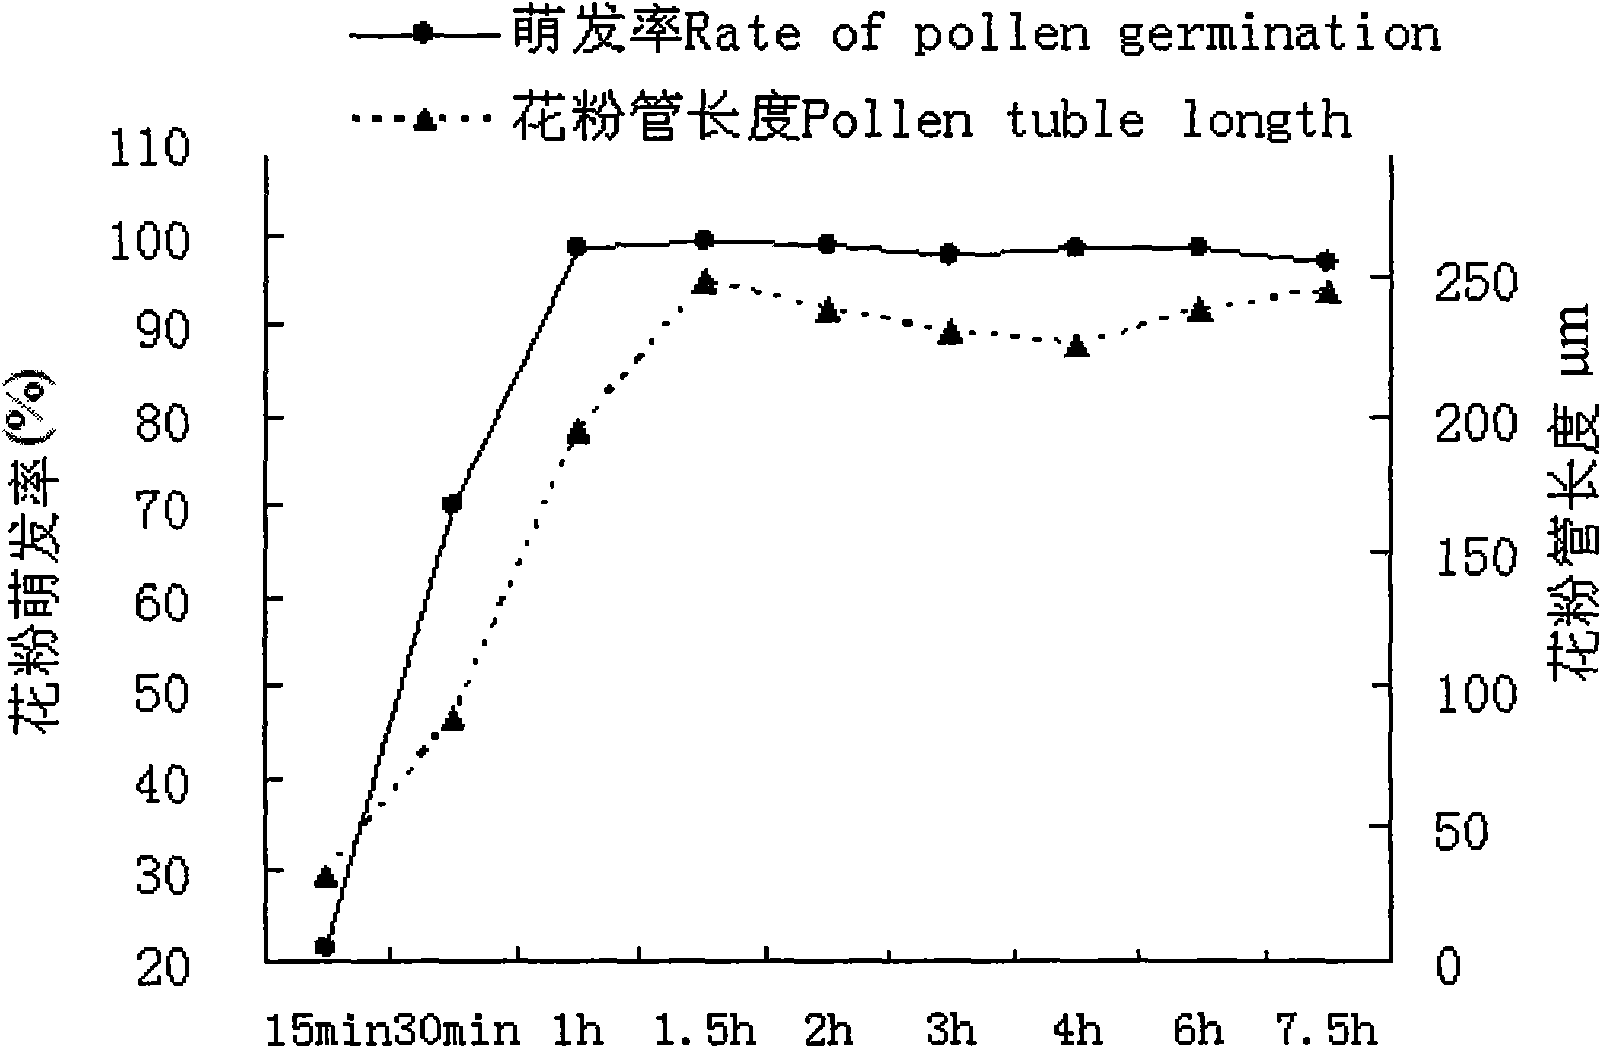 In-vitro pollen germination liquid medium of balloon flower and method using same to determine pollen viability thereof